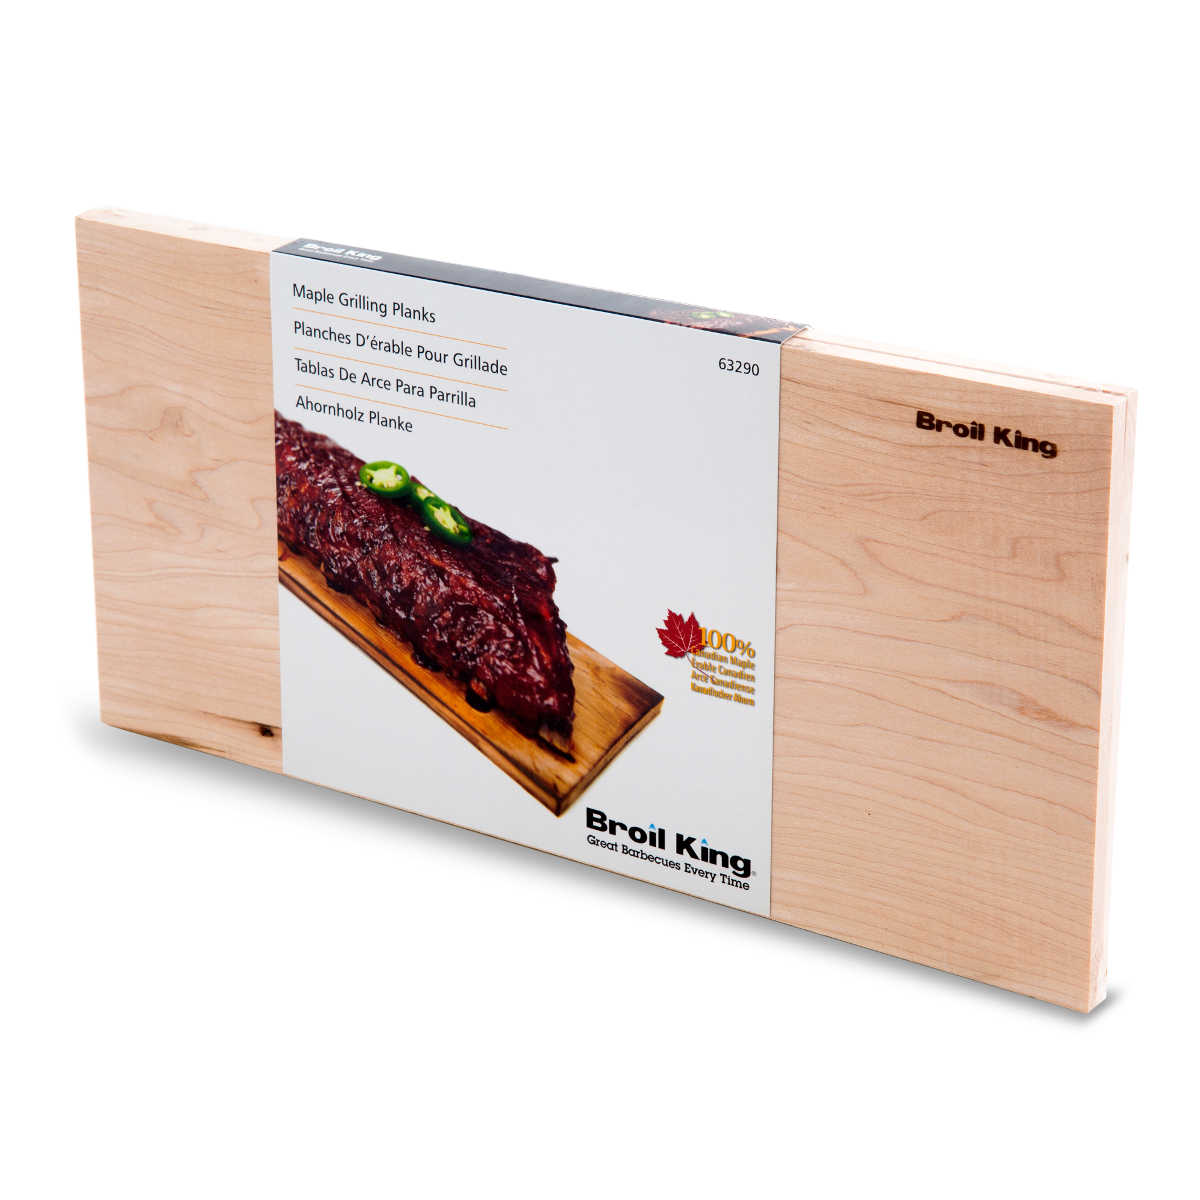 Broil King Ahornholz-Planke Verpackung